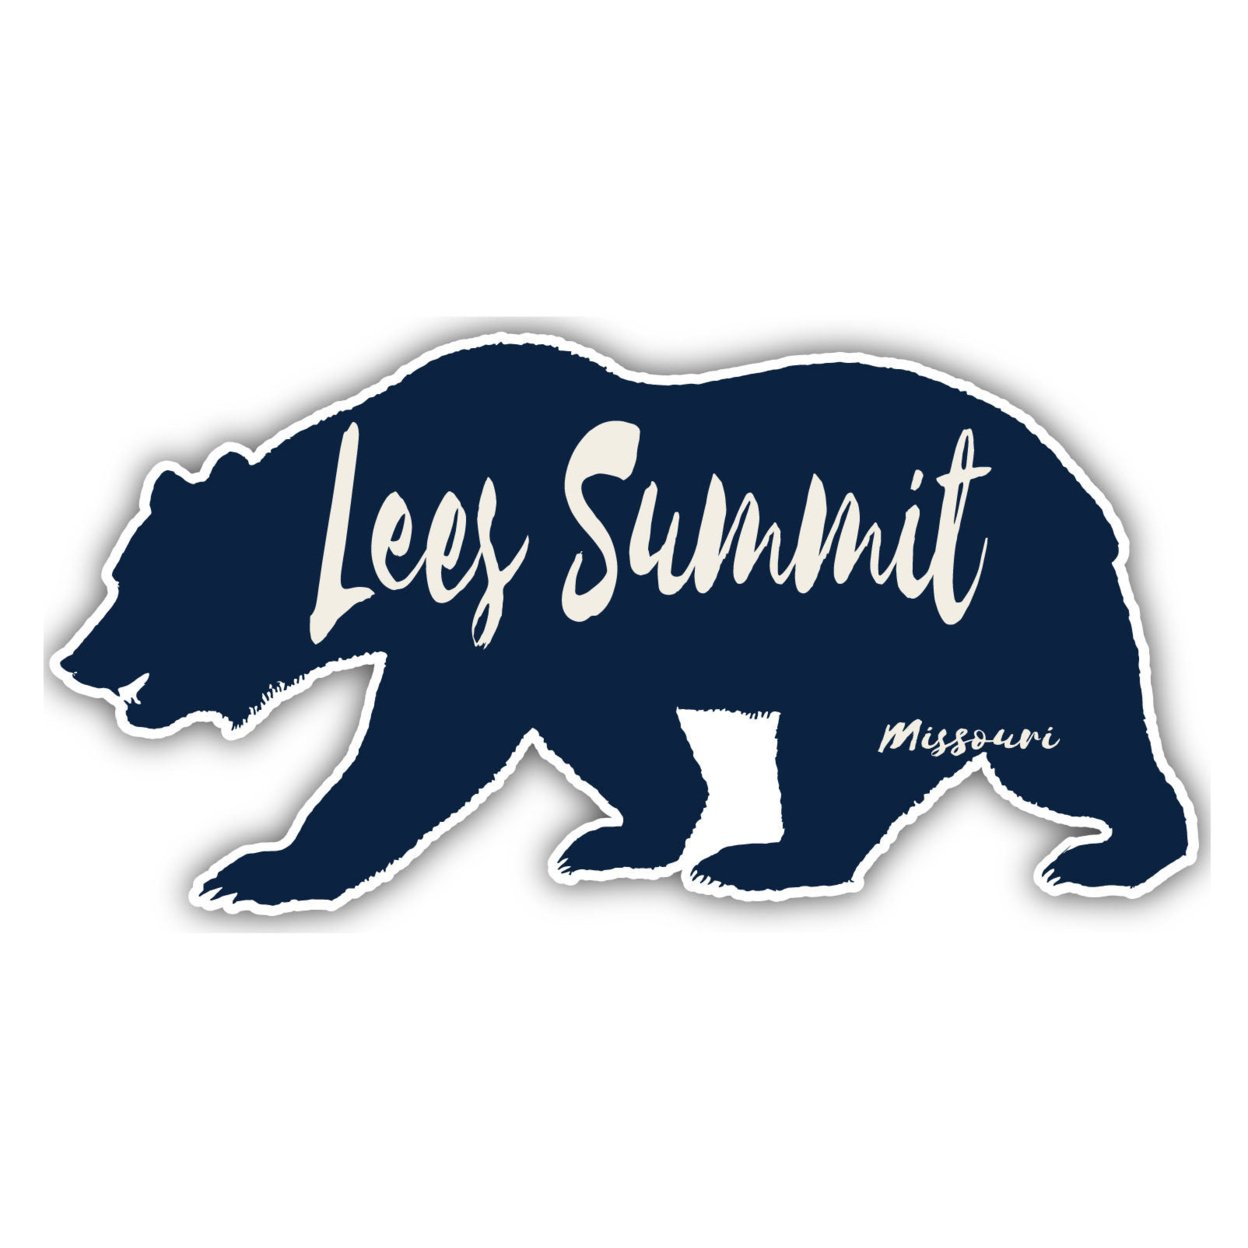 Lees Summit Missouri Souvenir Decorative Stickers (Choose Theme And Size) - 4-Inch, Bear